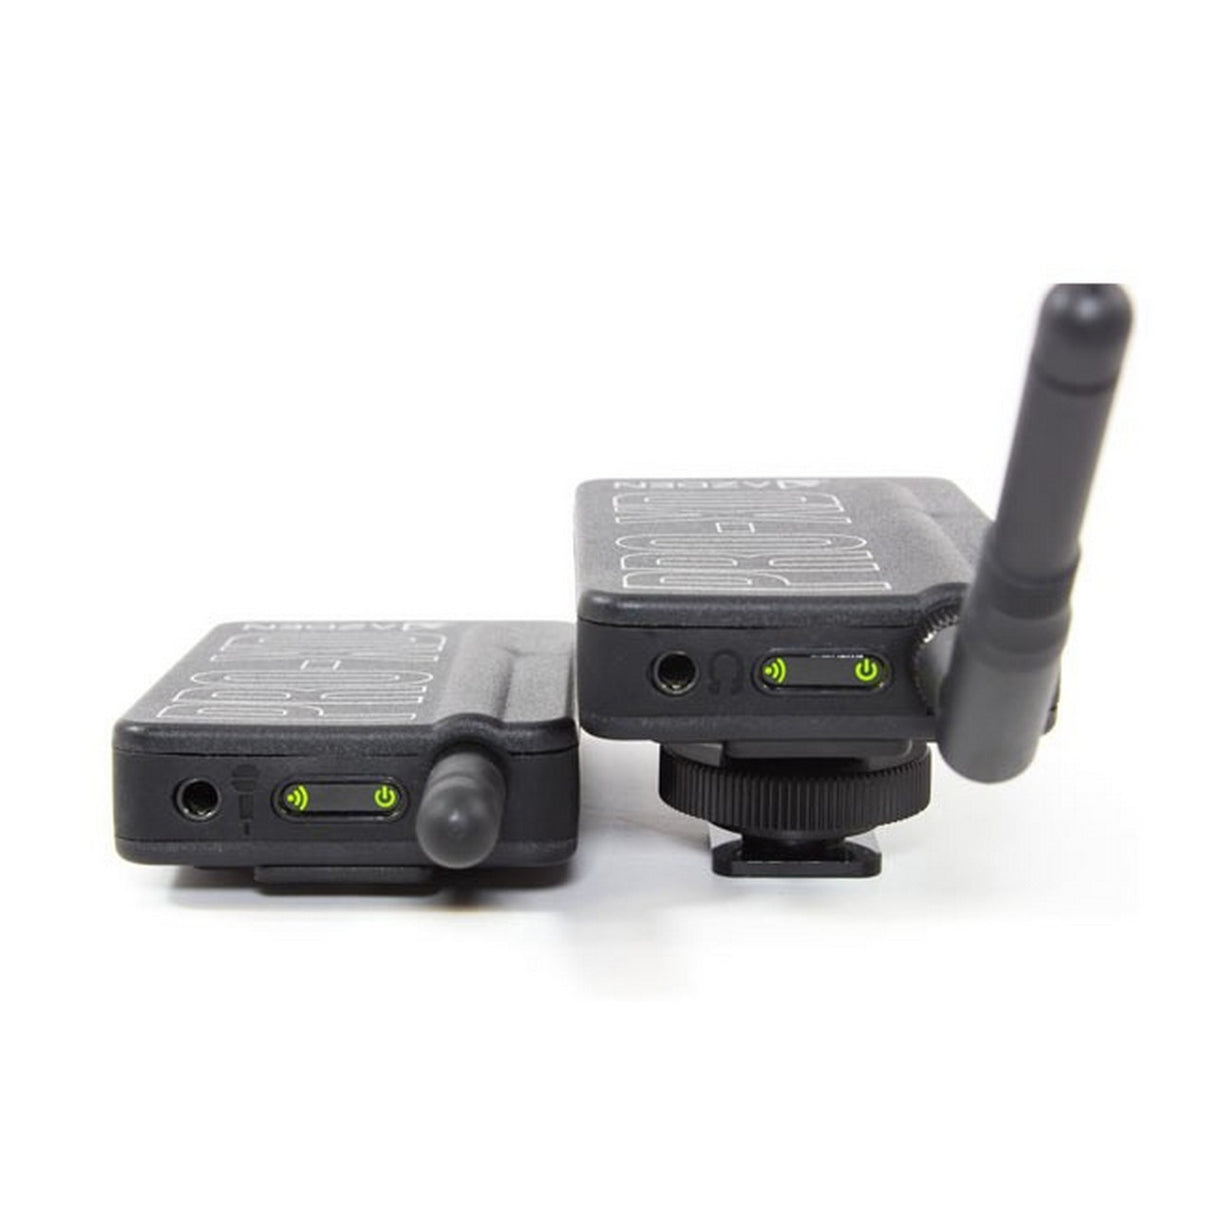 Azden PRO-XD 2.4GHz Digital Wireless Microphone System (Used)